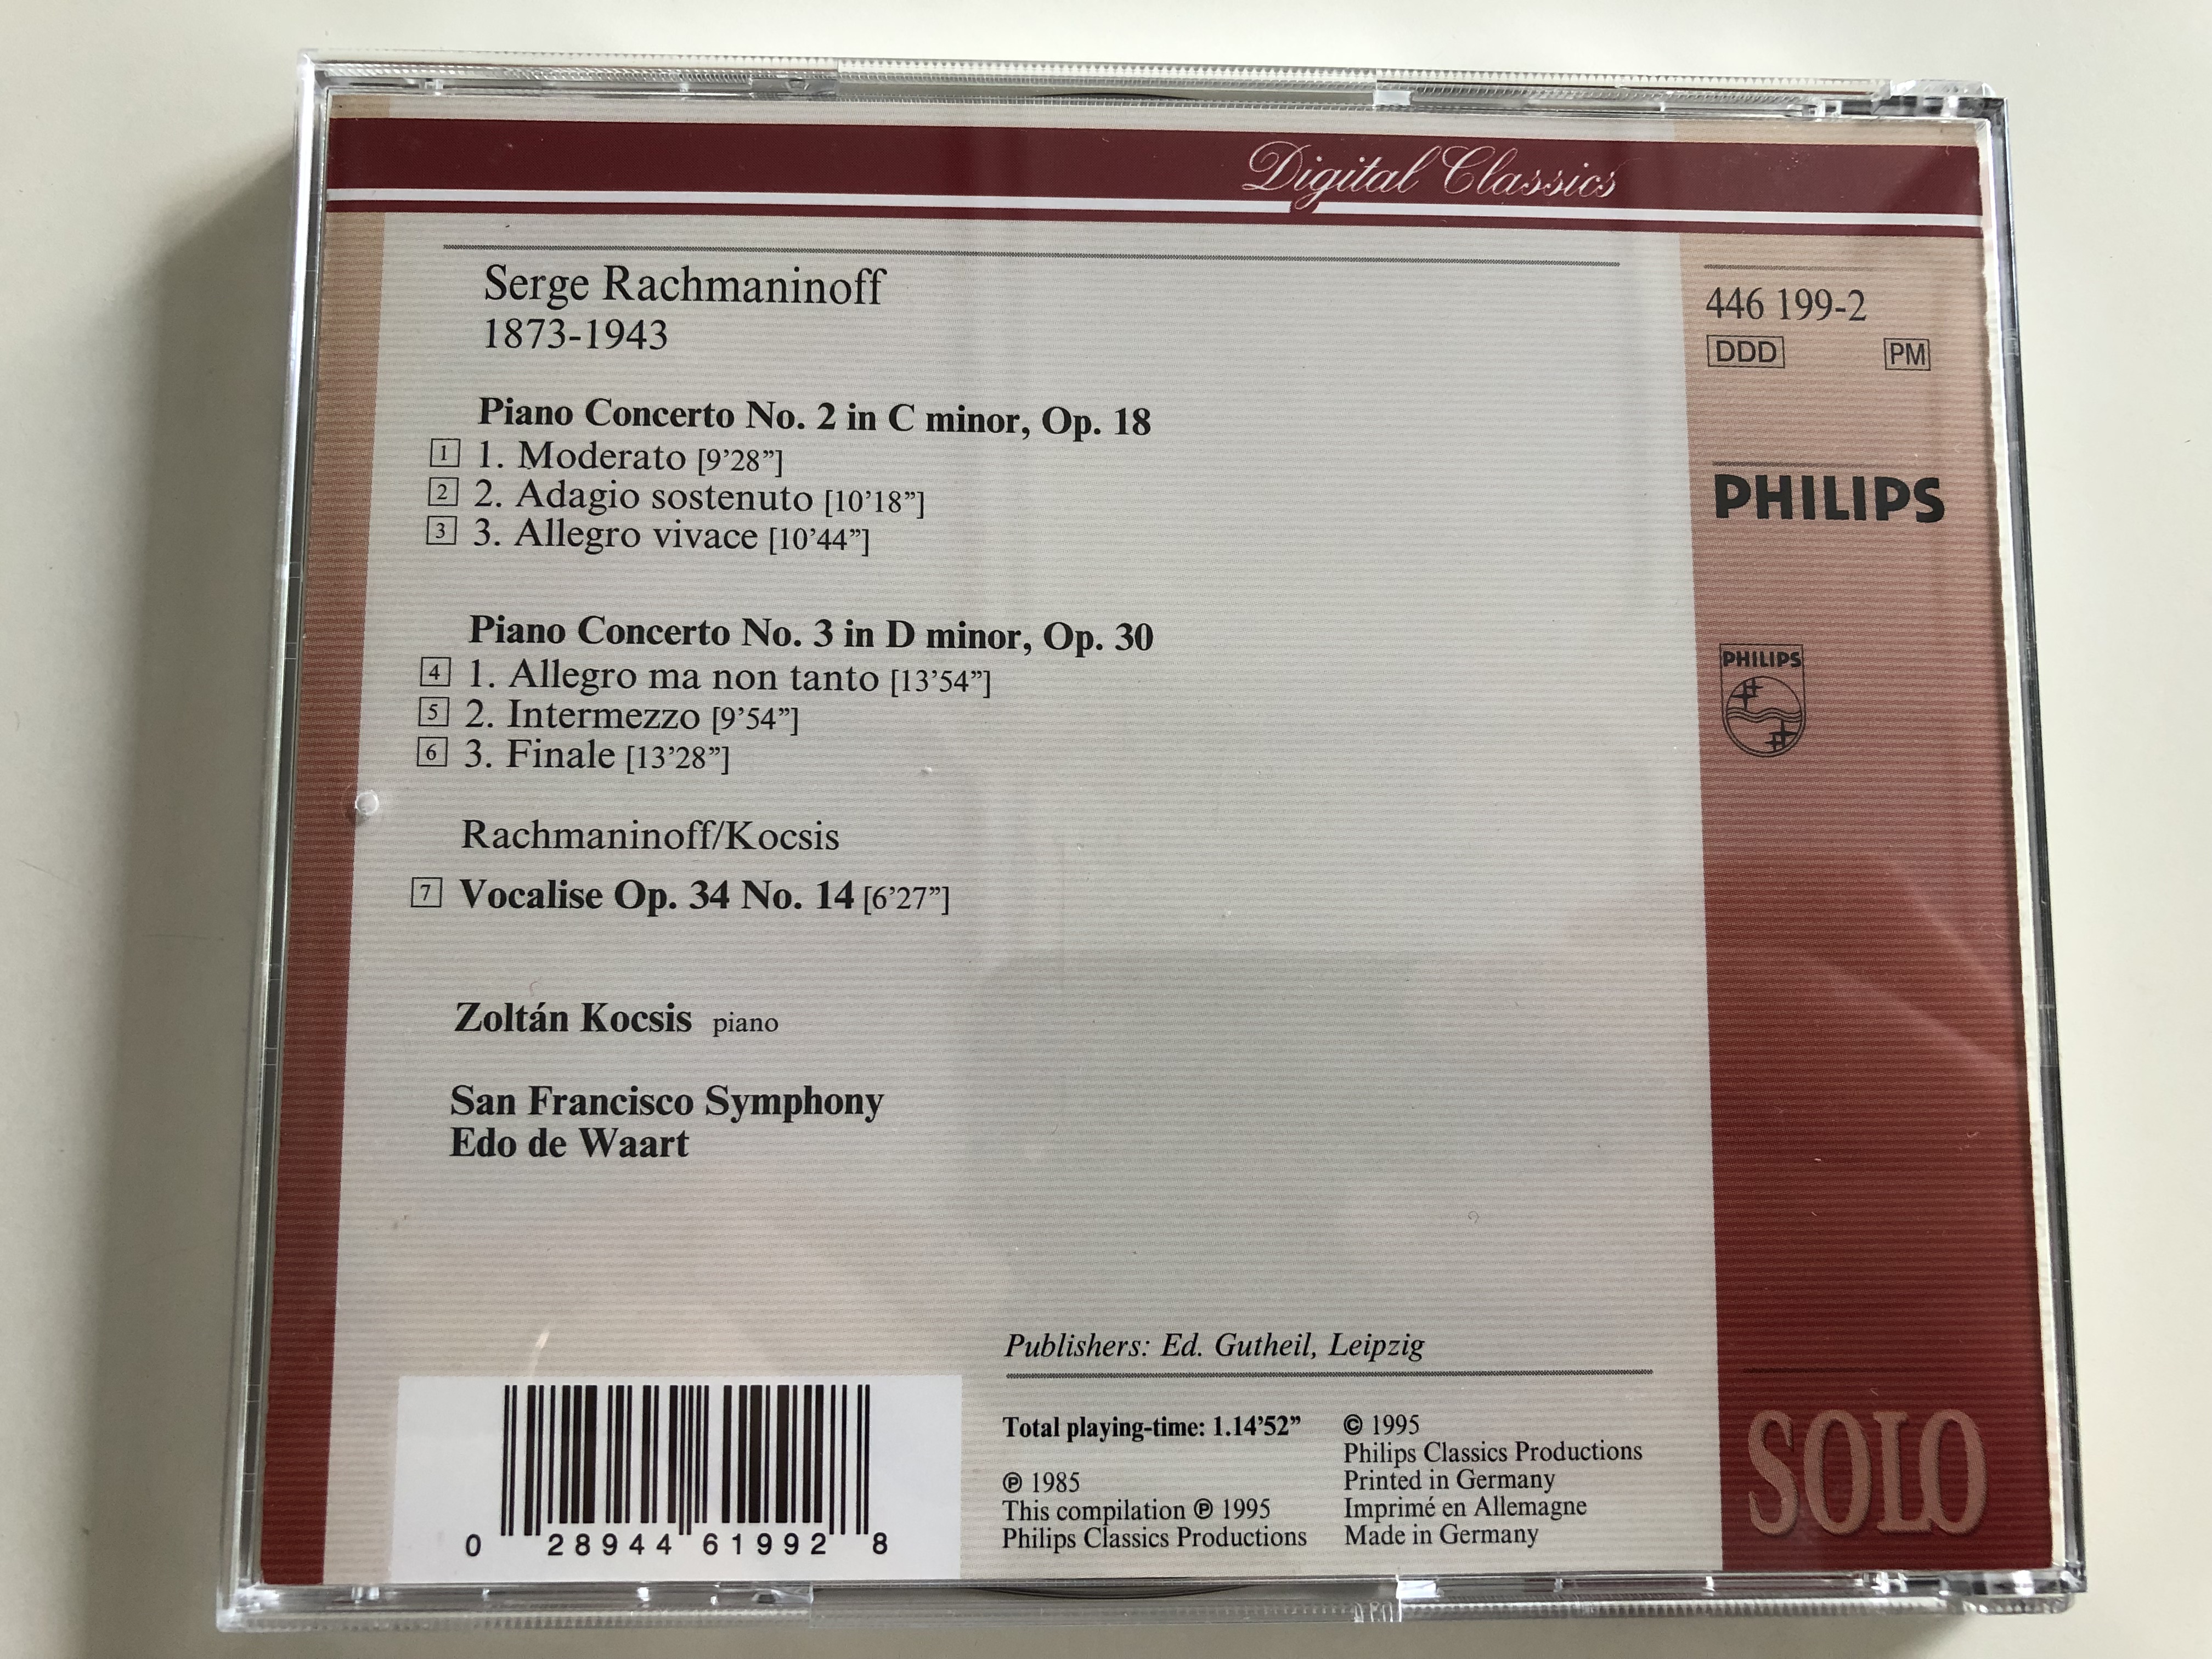 rachmaninoff-piano-concertos-nos.-2-3-vocalise-zolt-n-kocsis-san-francisco-symphony-edo-de-waart-philips-digital-classics-audio-cd-1995-446-199-2-6-.jpg